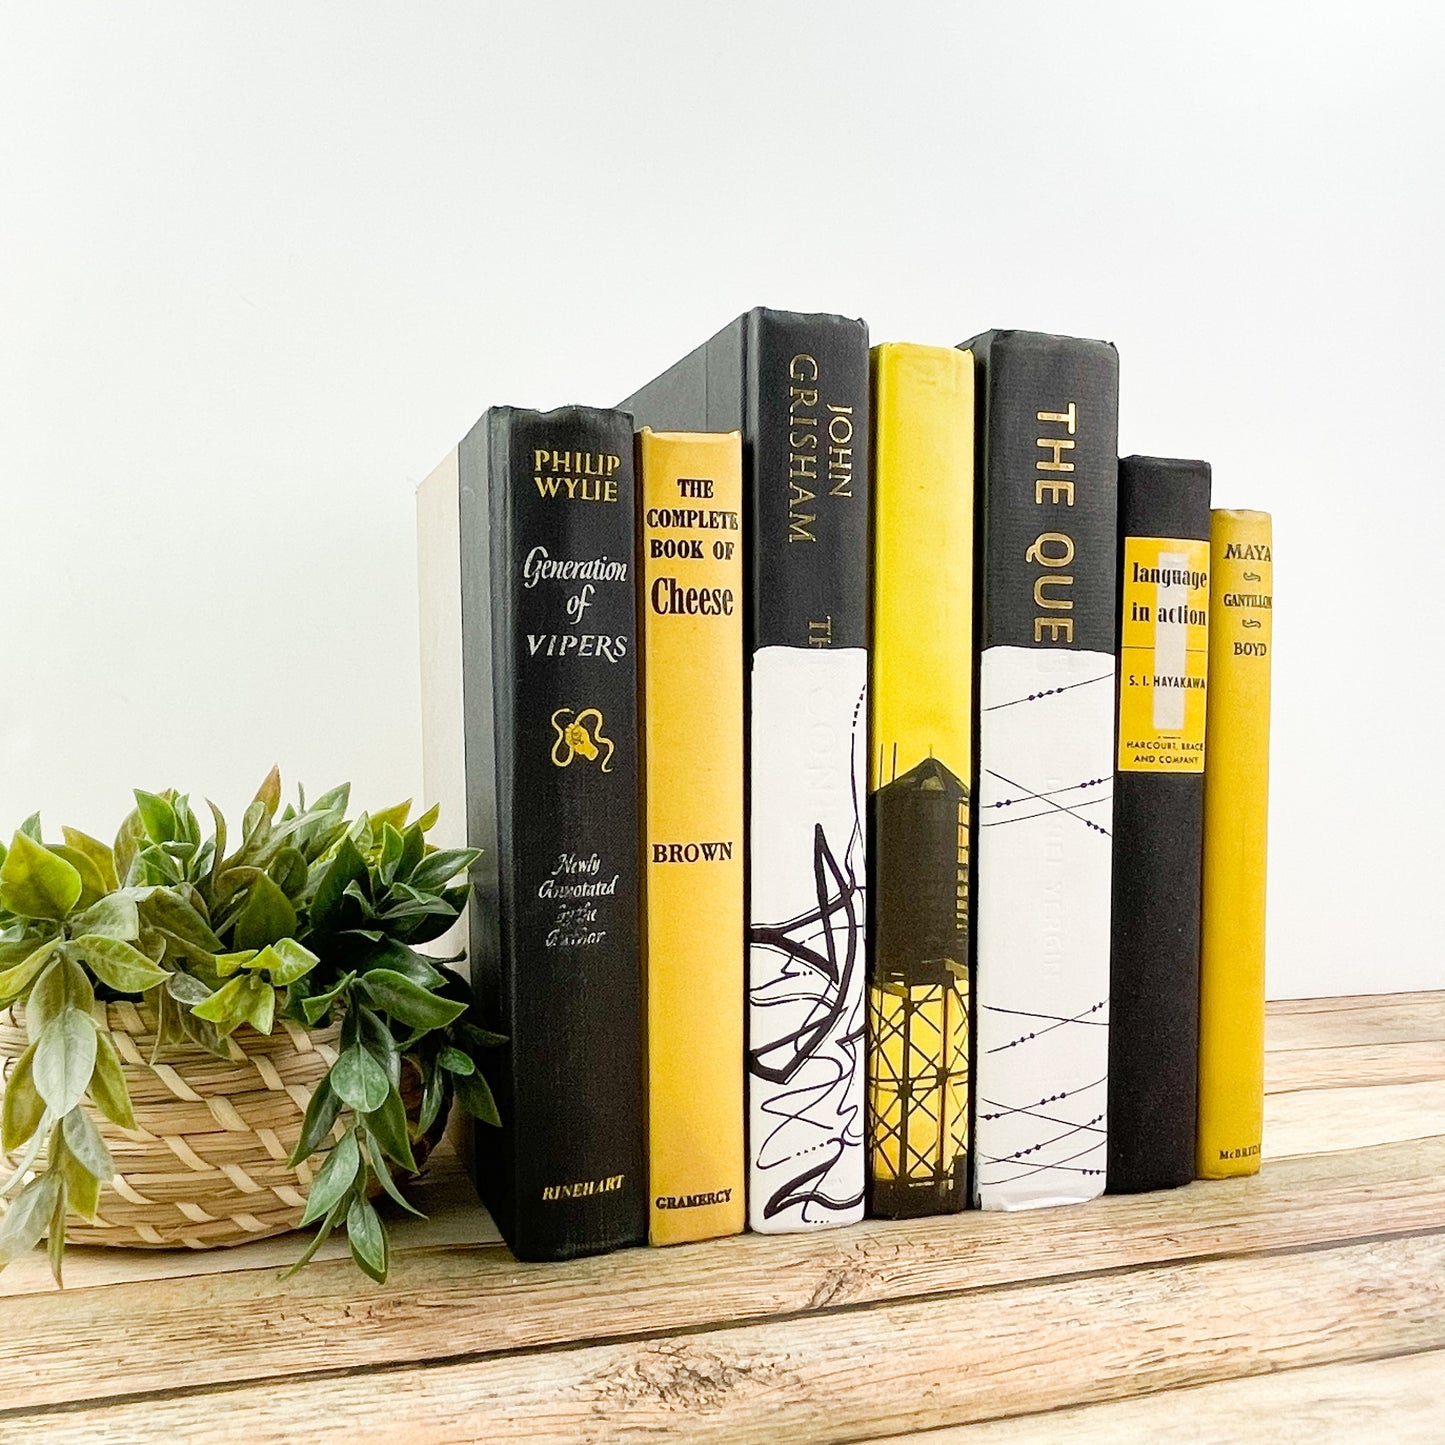 Yellow and Black Decorative Books